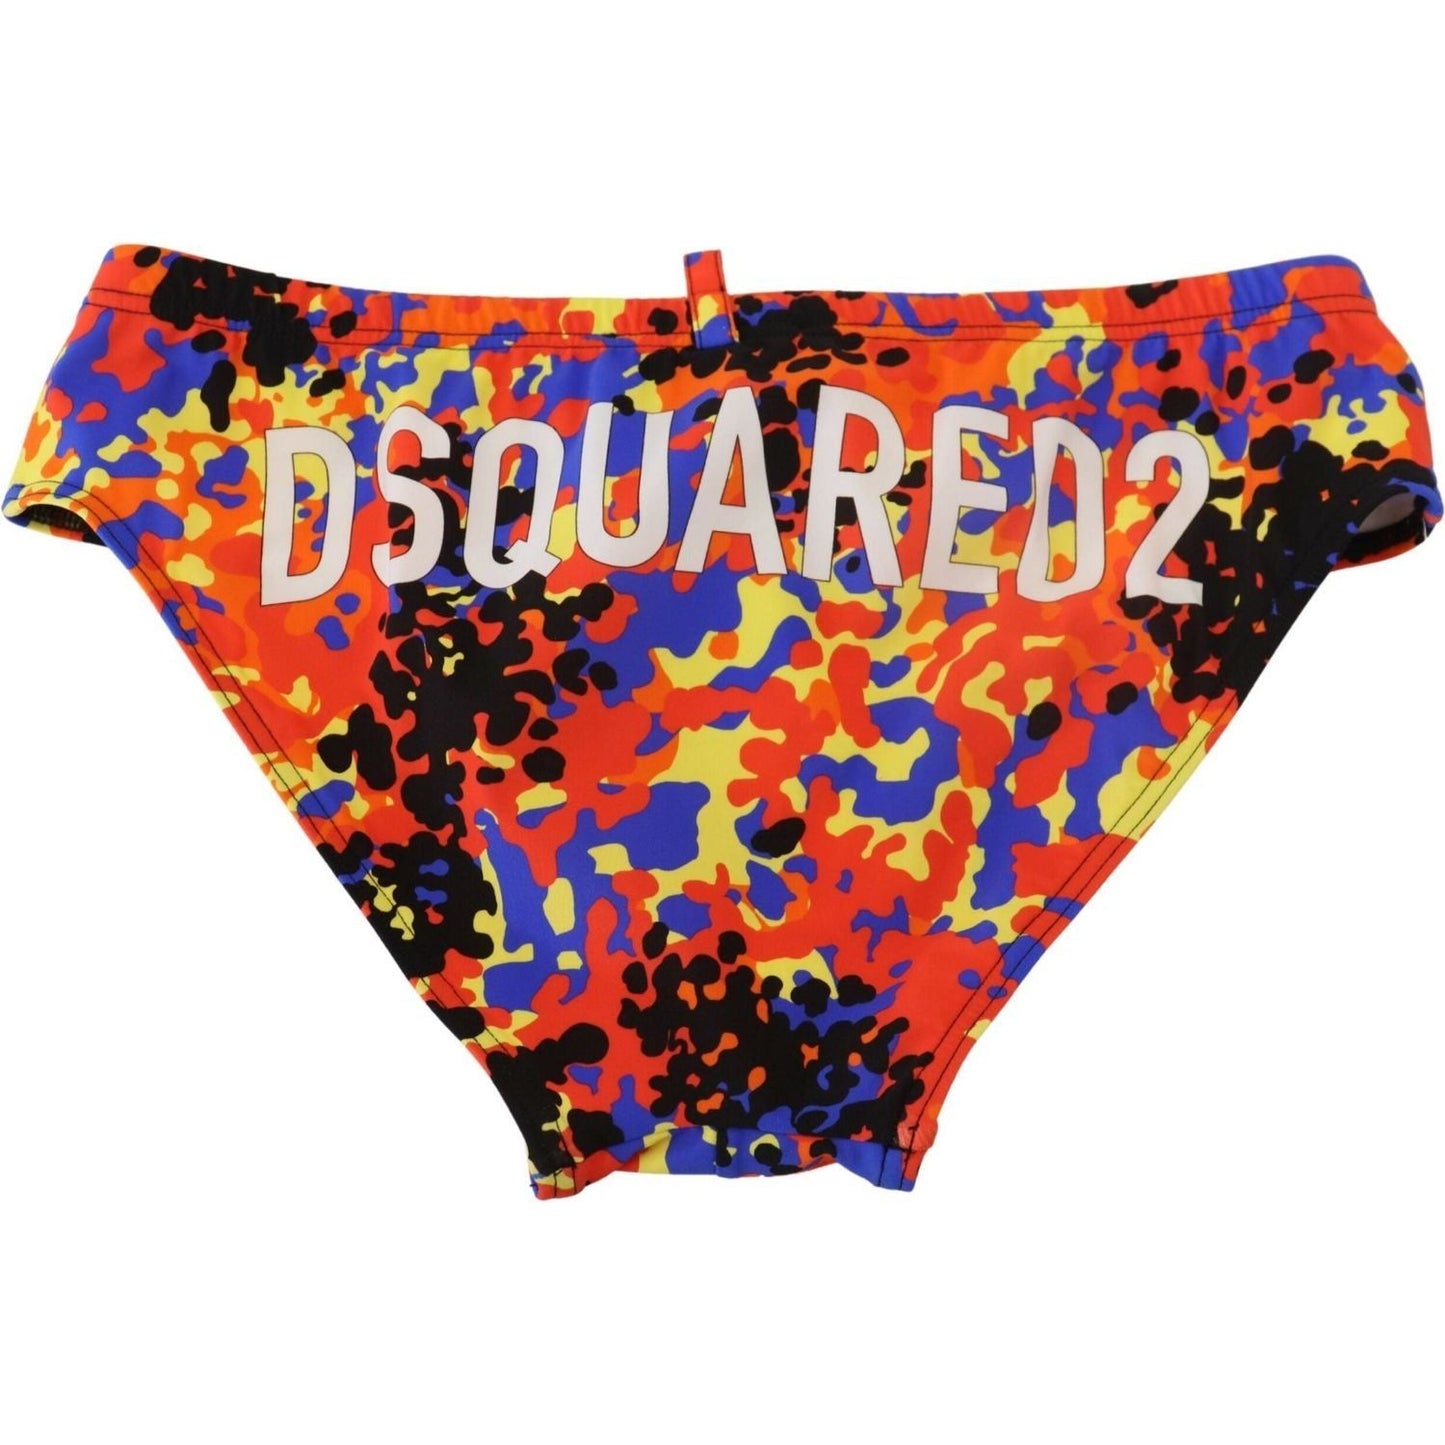 Dsquared² Exclusive Multicolor Swim Trunks multicolor-logo-printed-men-swim-brief-swimwear IMG_6085-scaled-c83a0ba2-940.jpg